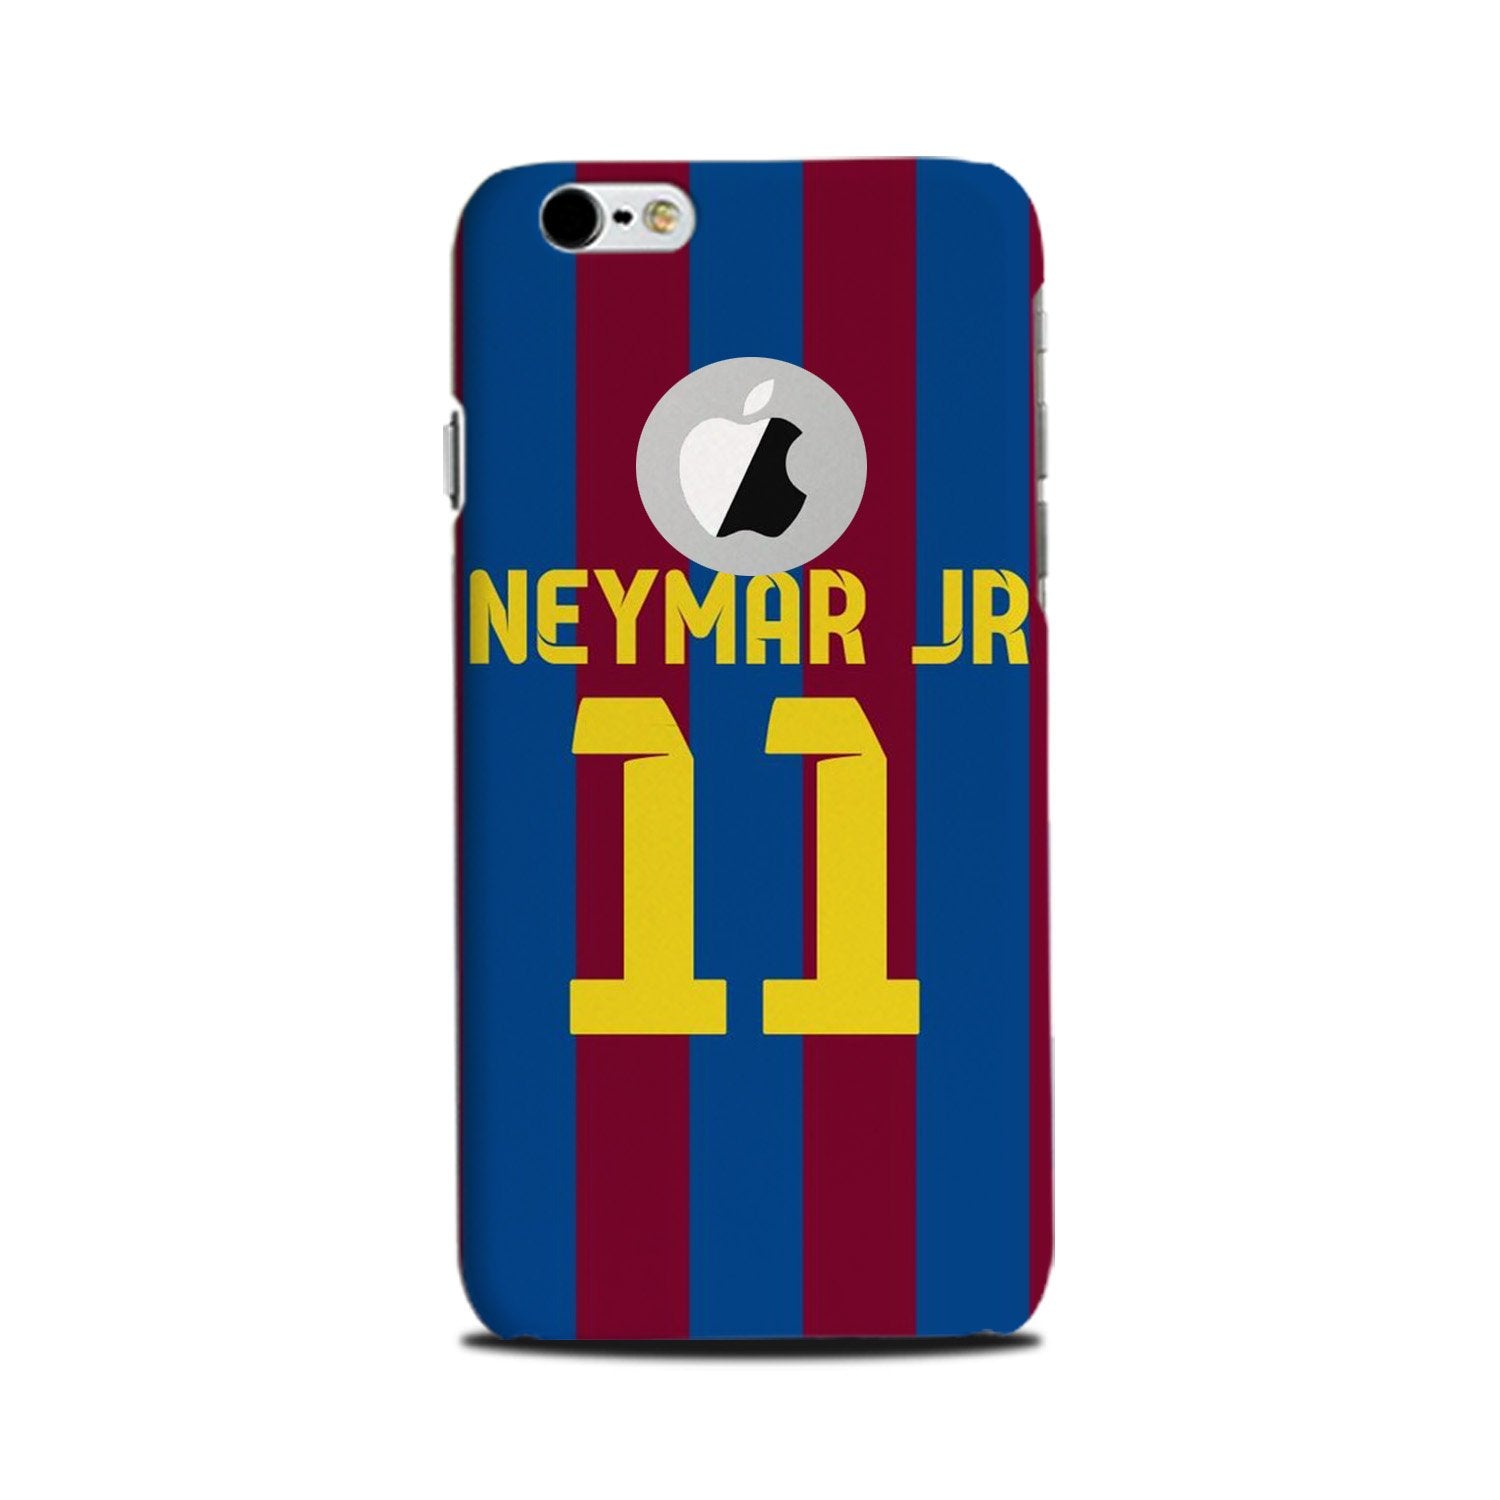 Neymar Jr Case for iPhone 6 Plus / 6s Plus logo cut (Design - 162)